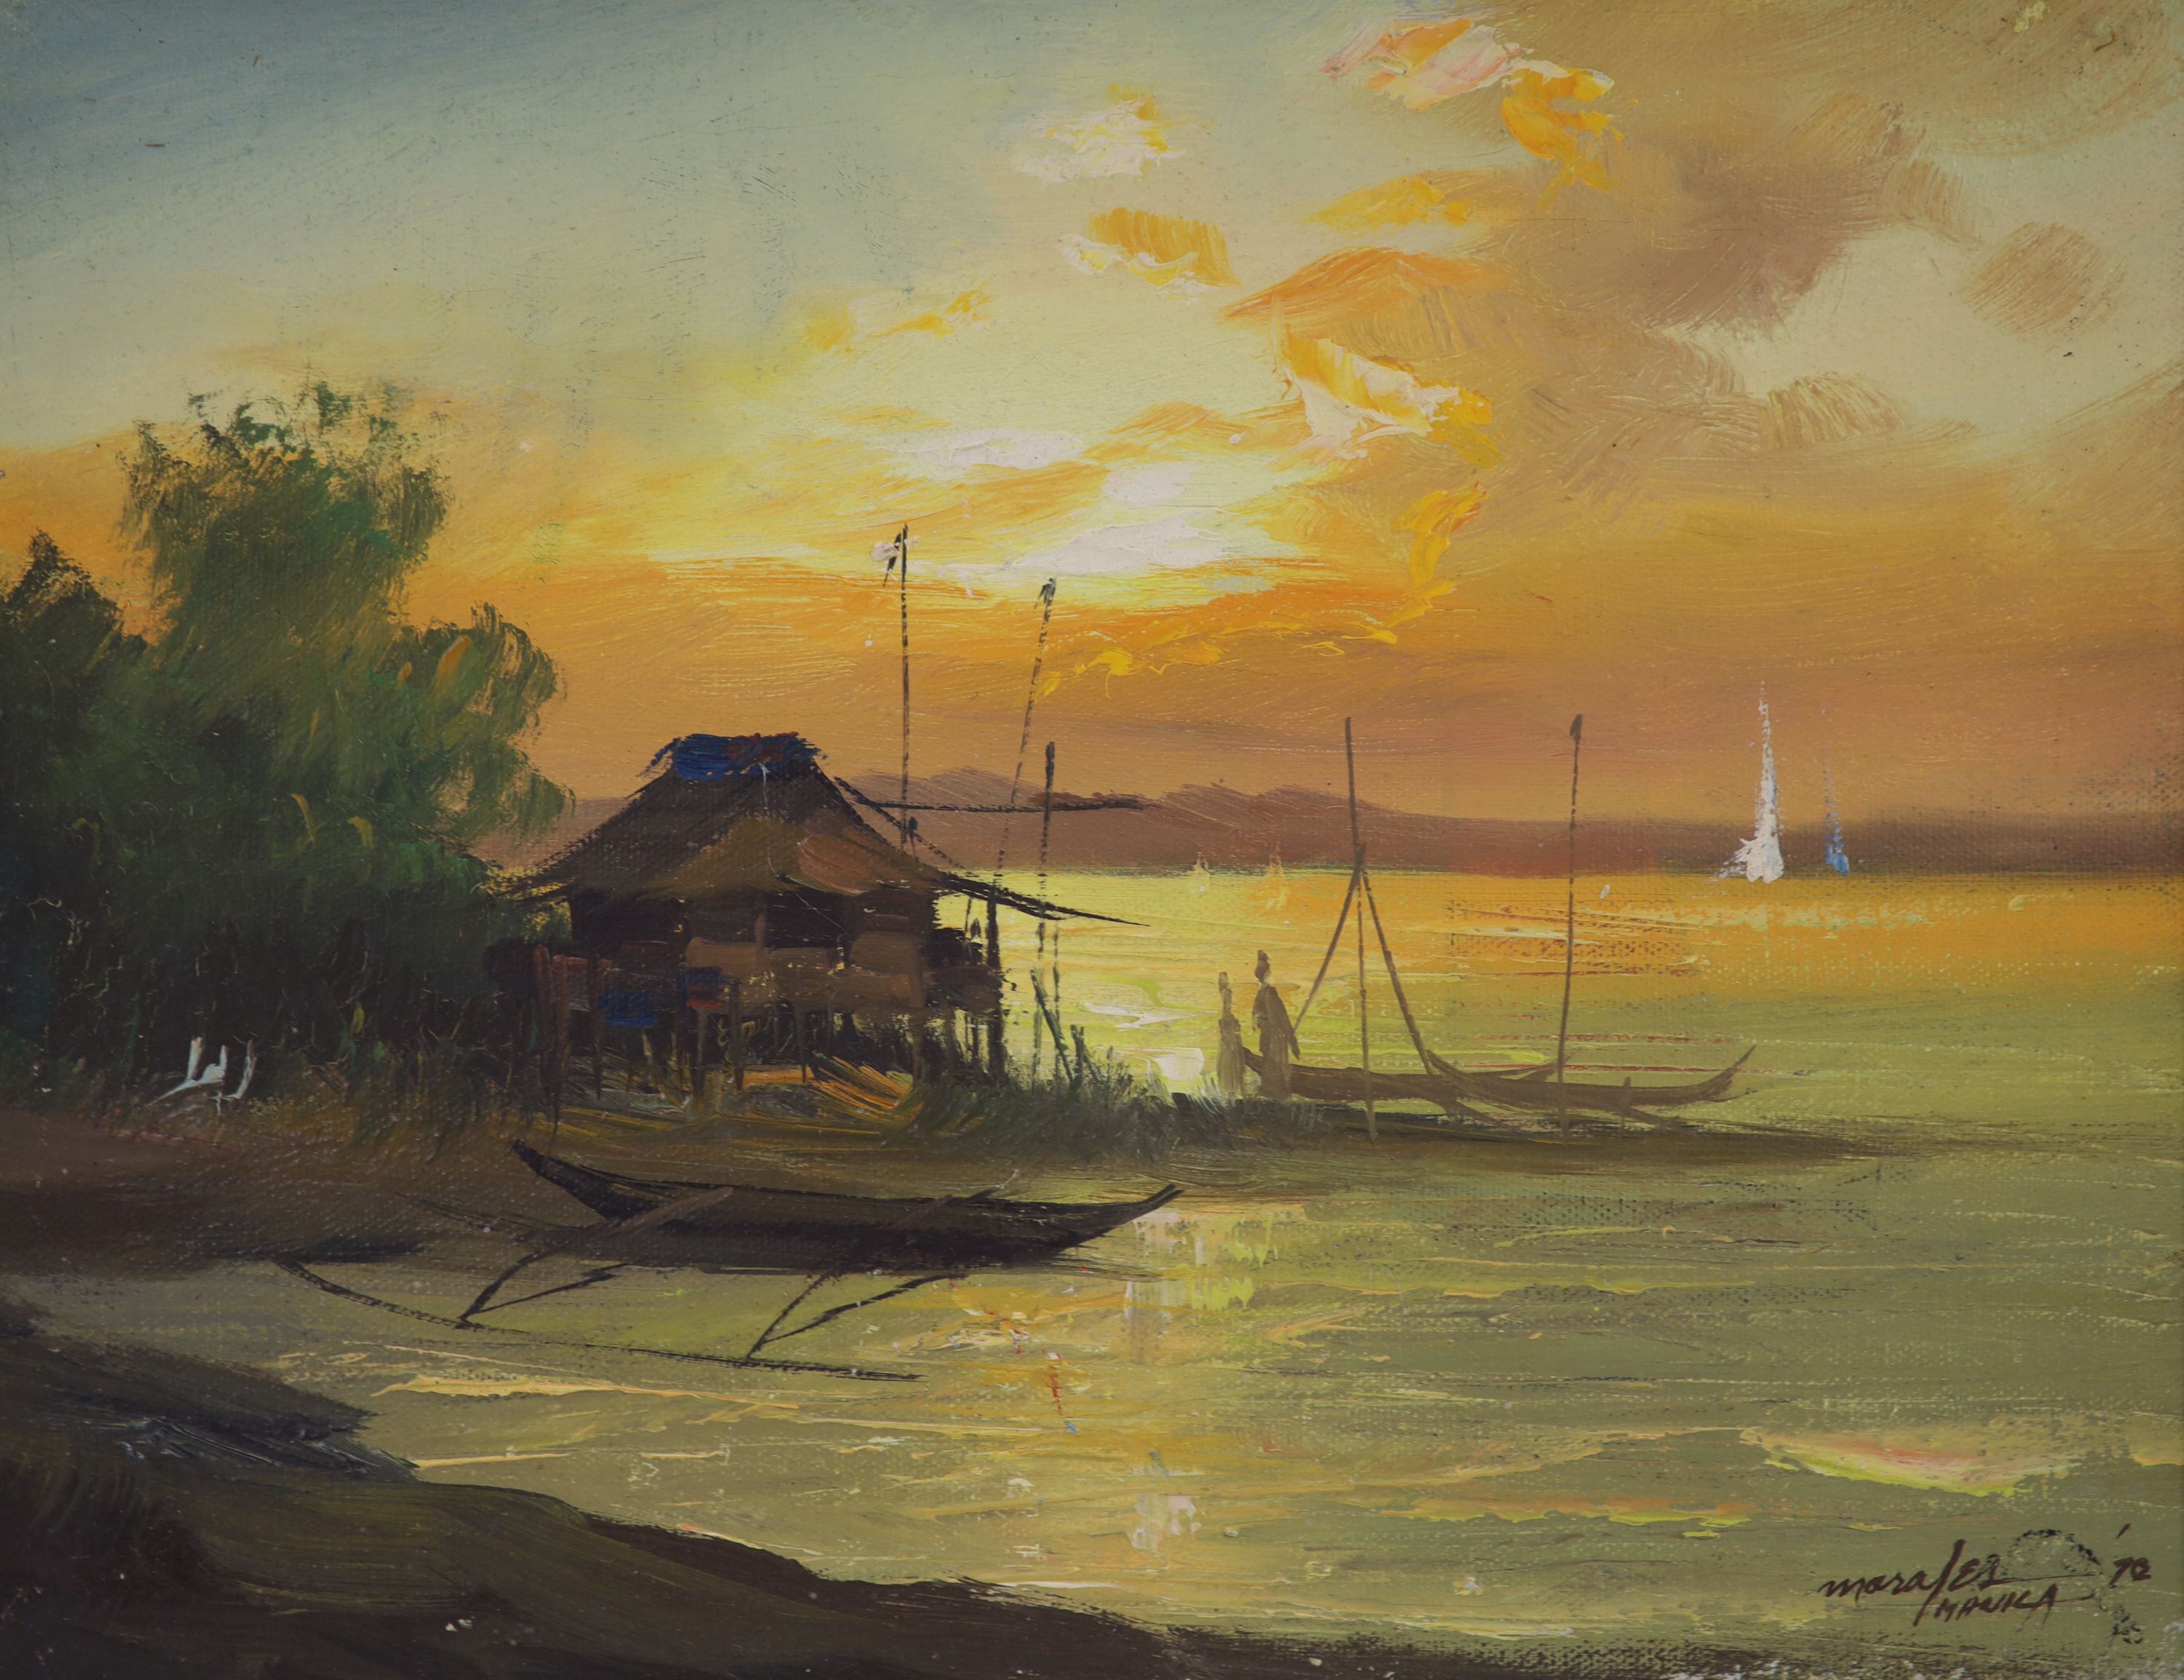 Maralez (Manila), oil on canvas, Coastal scene at sunset, signed and dated 70, 22 x 29cm